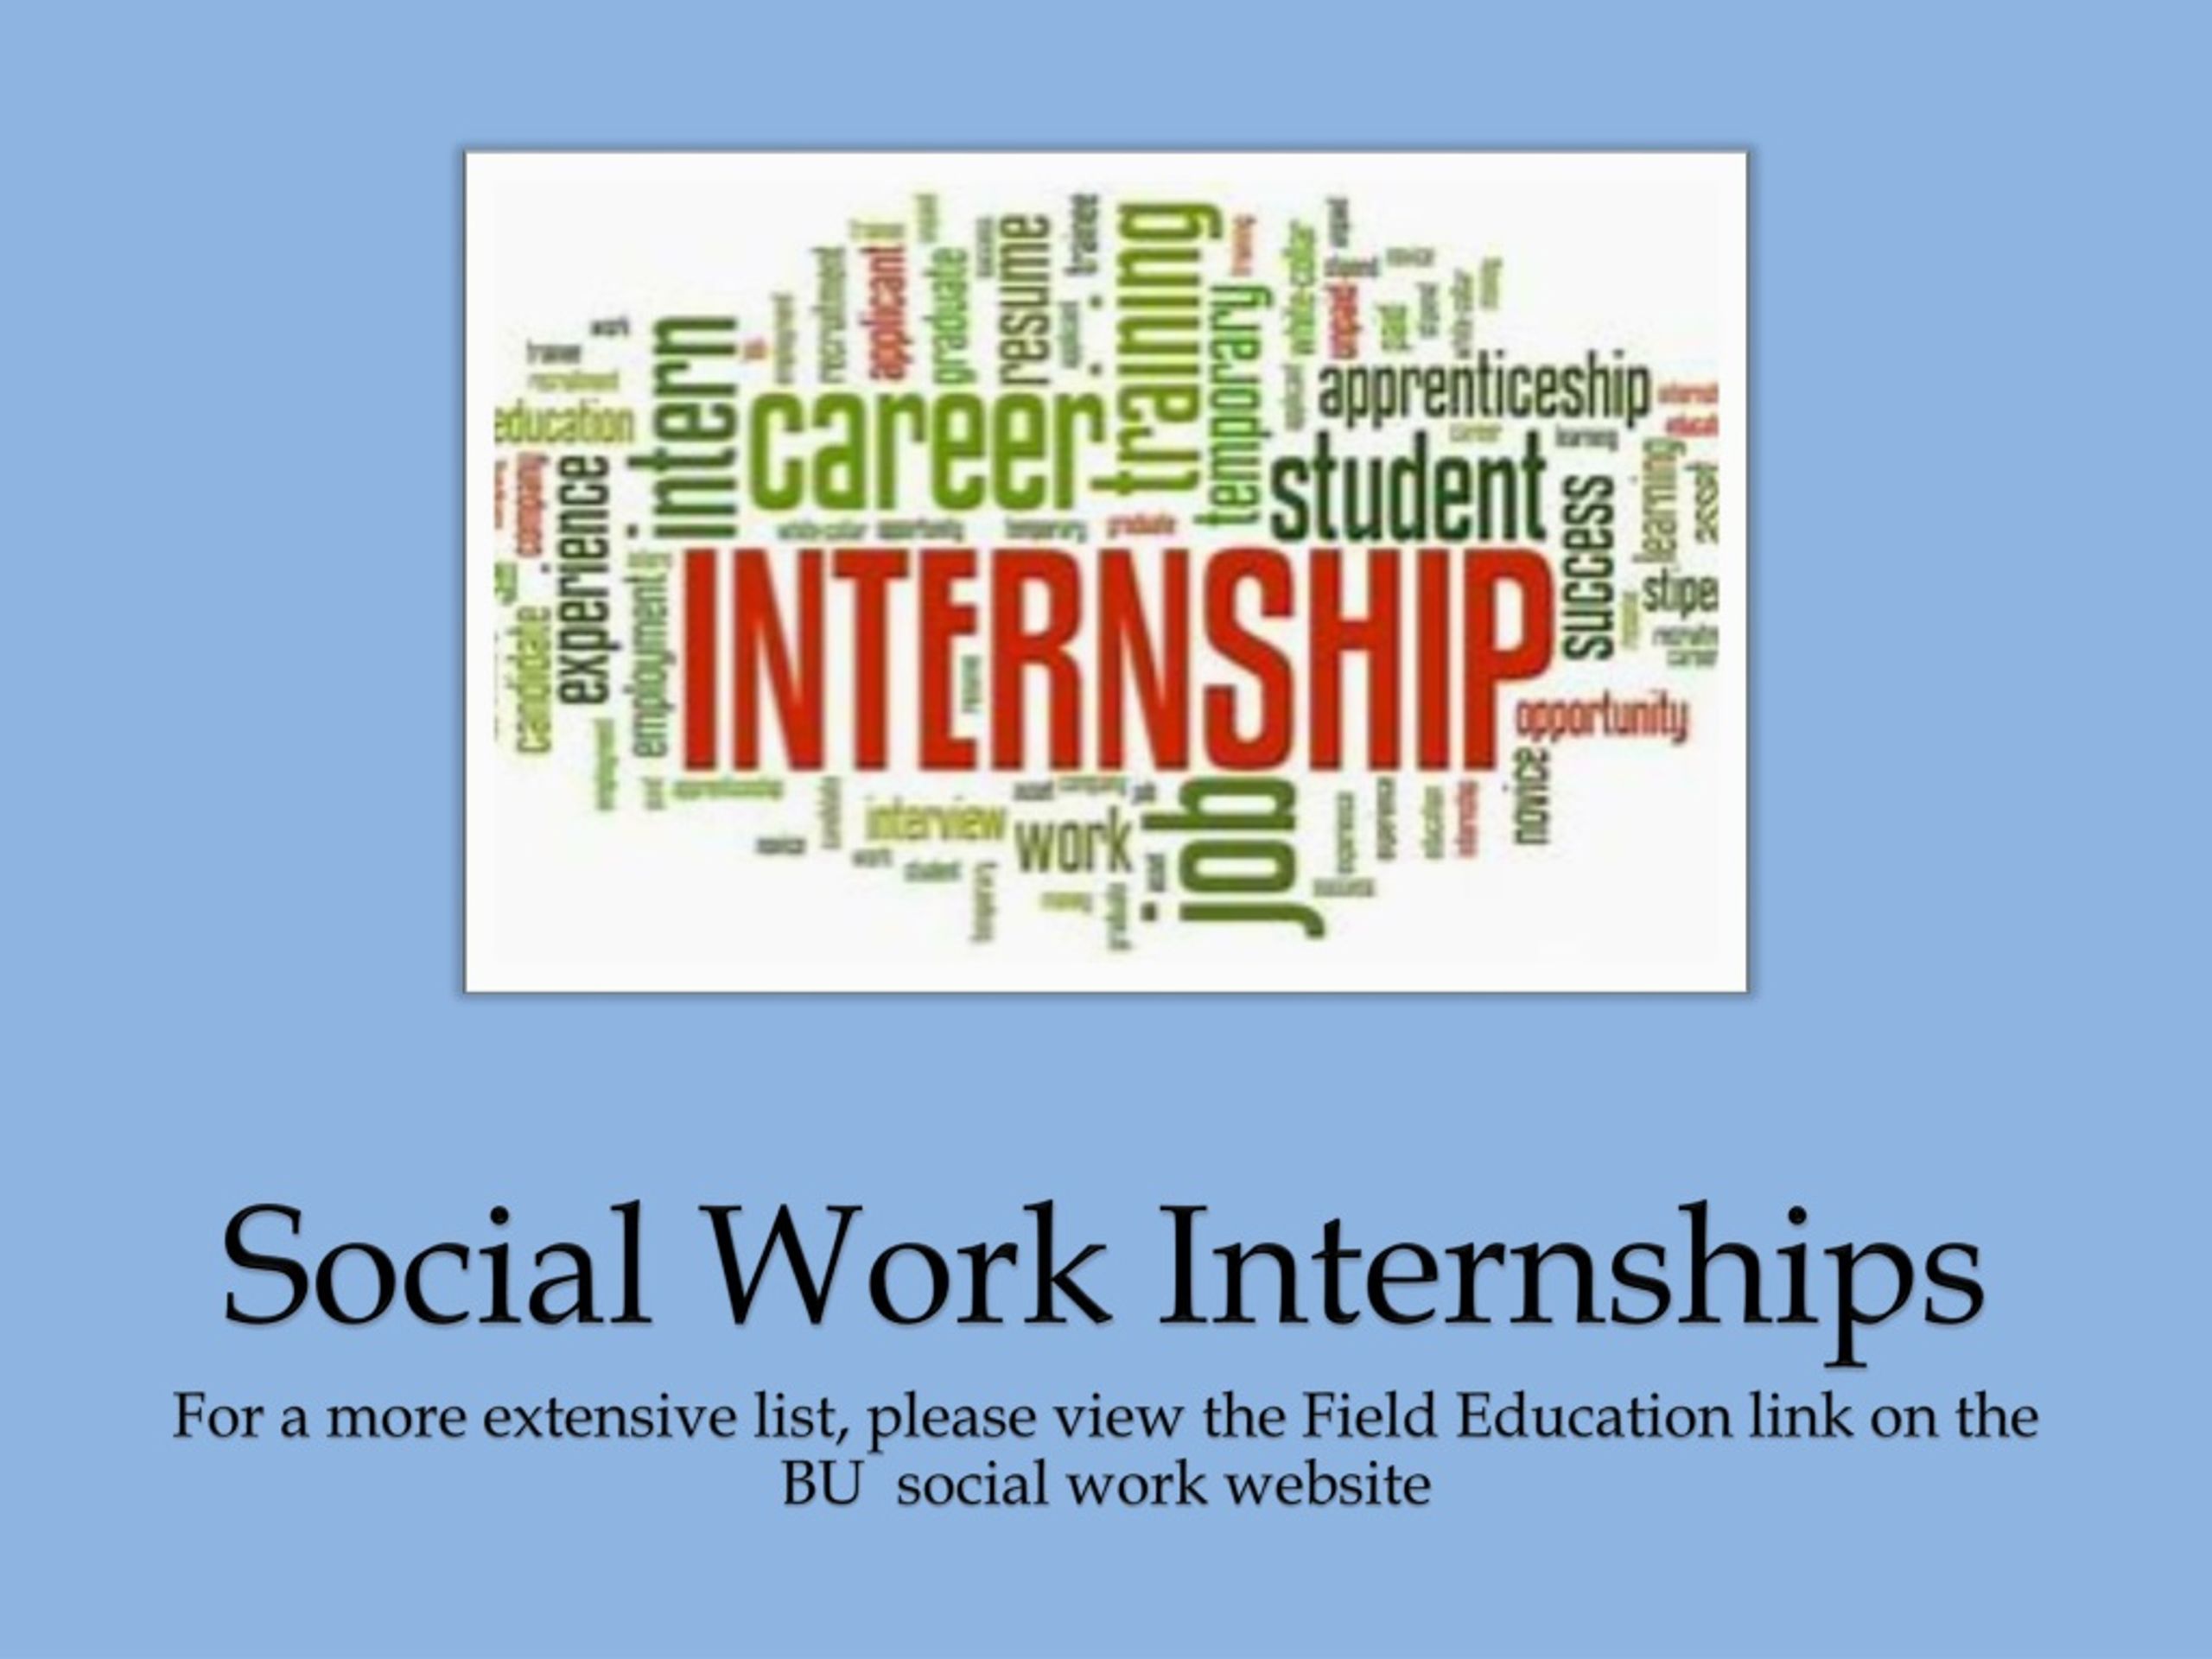 PPT Social Work Internships PowerPoint Presentation, free download